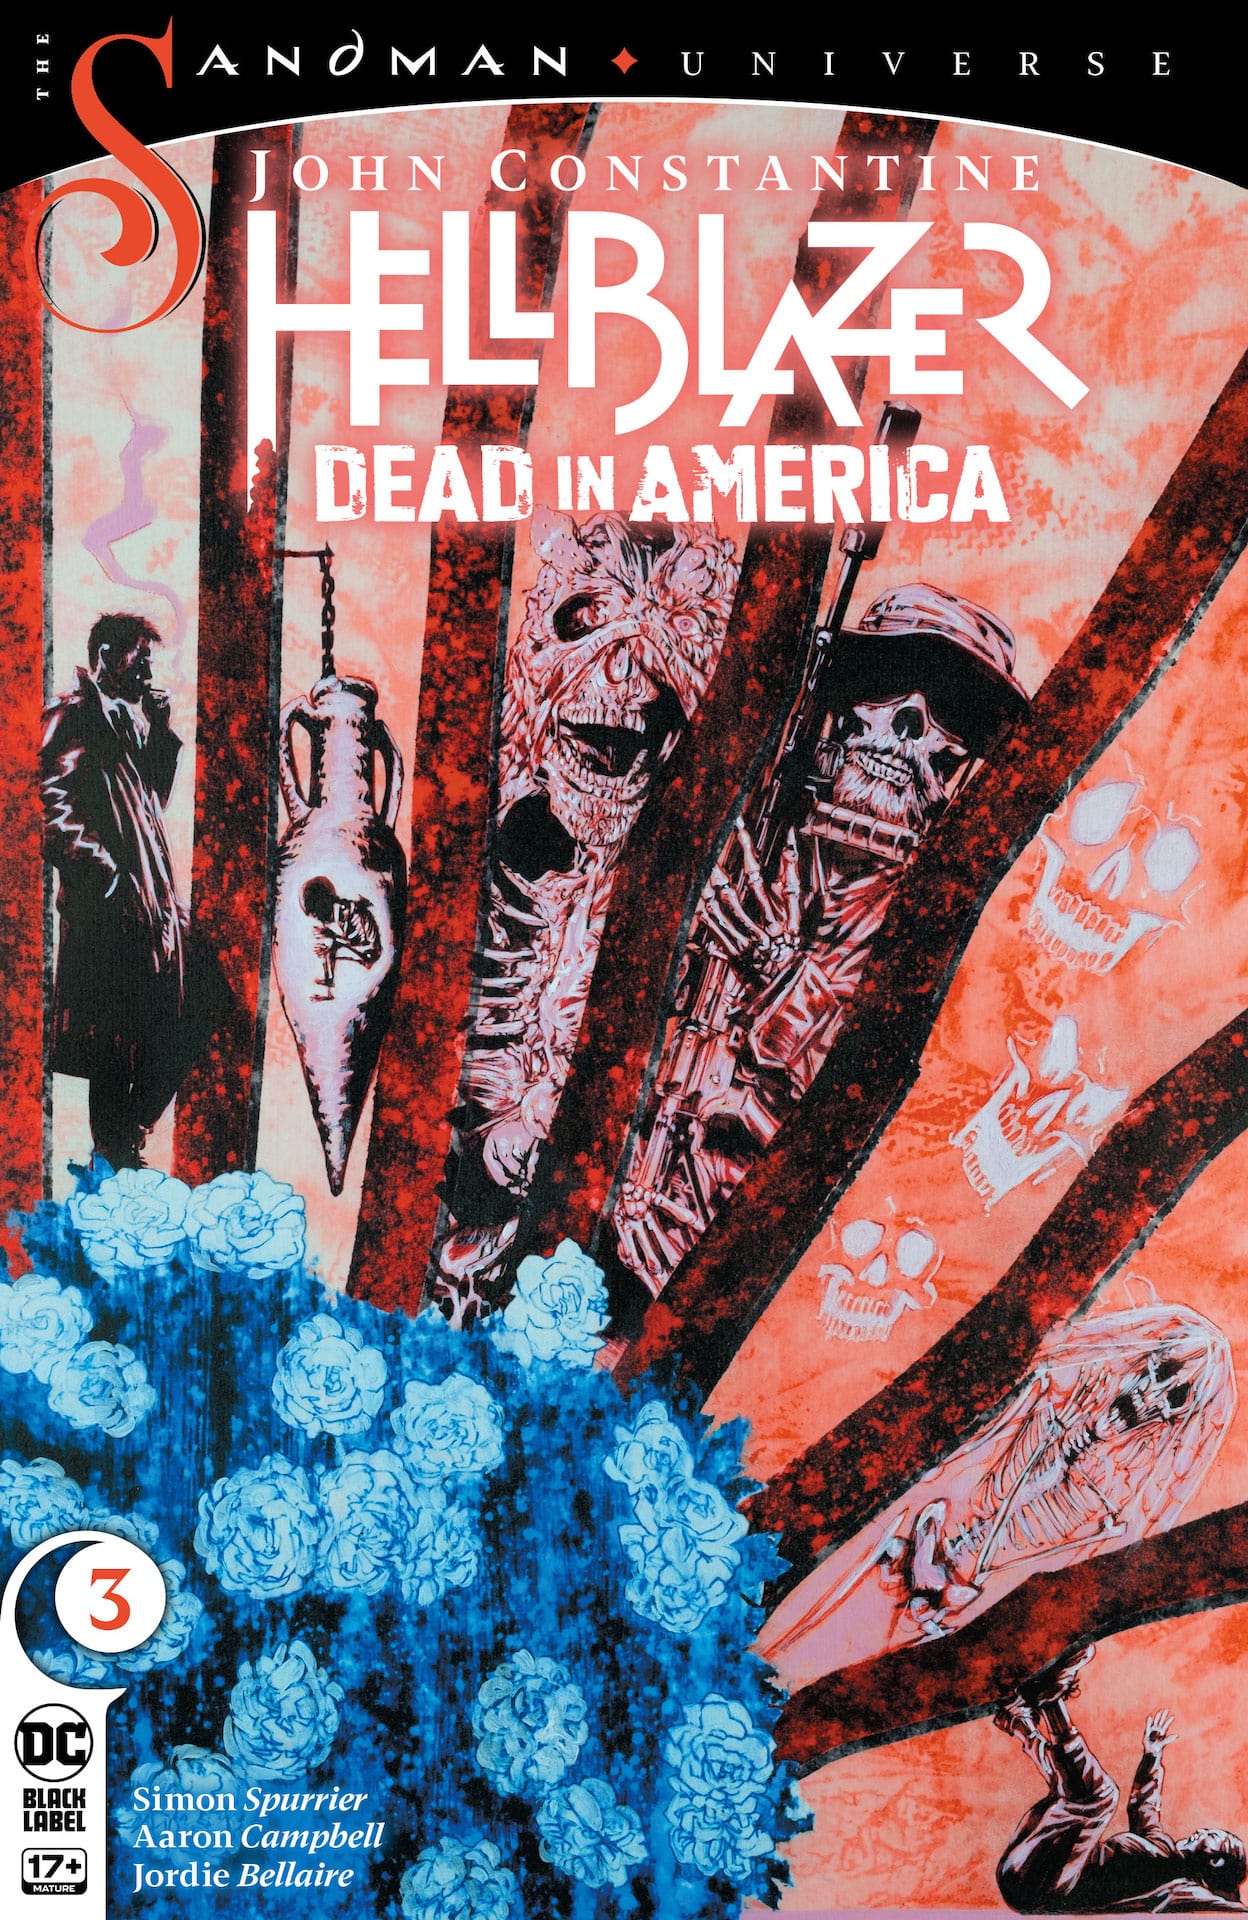 DC Preview: John Constantine, Hellblazer: Dead in America #3